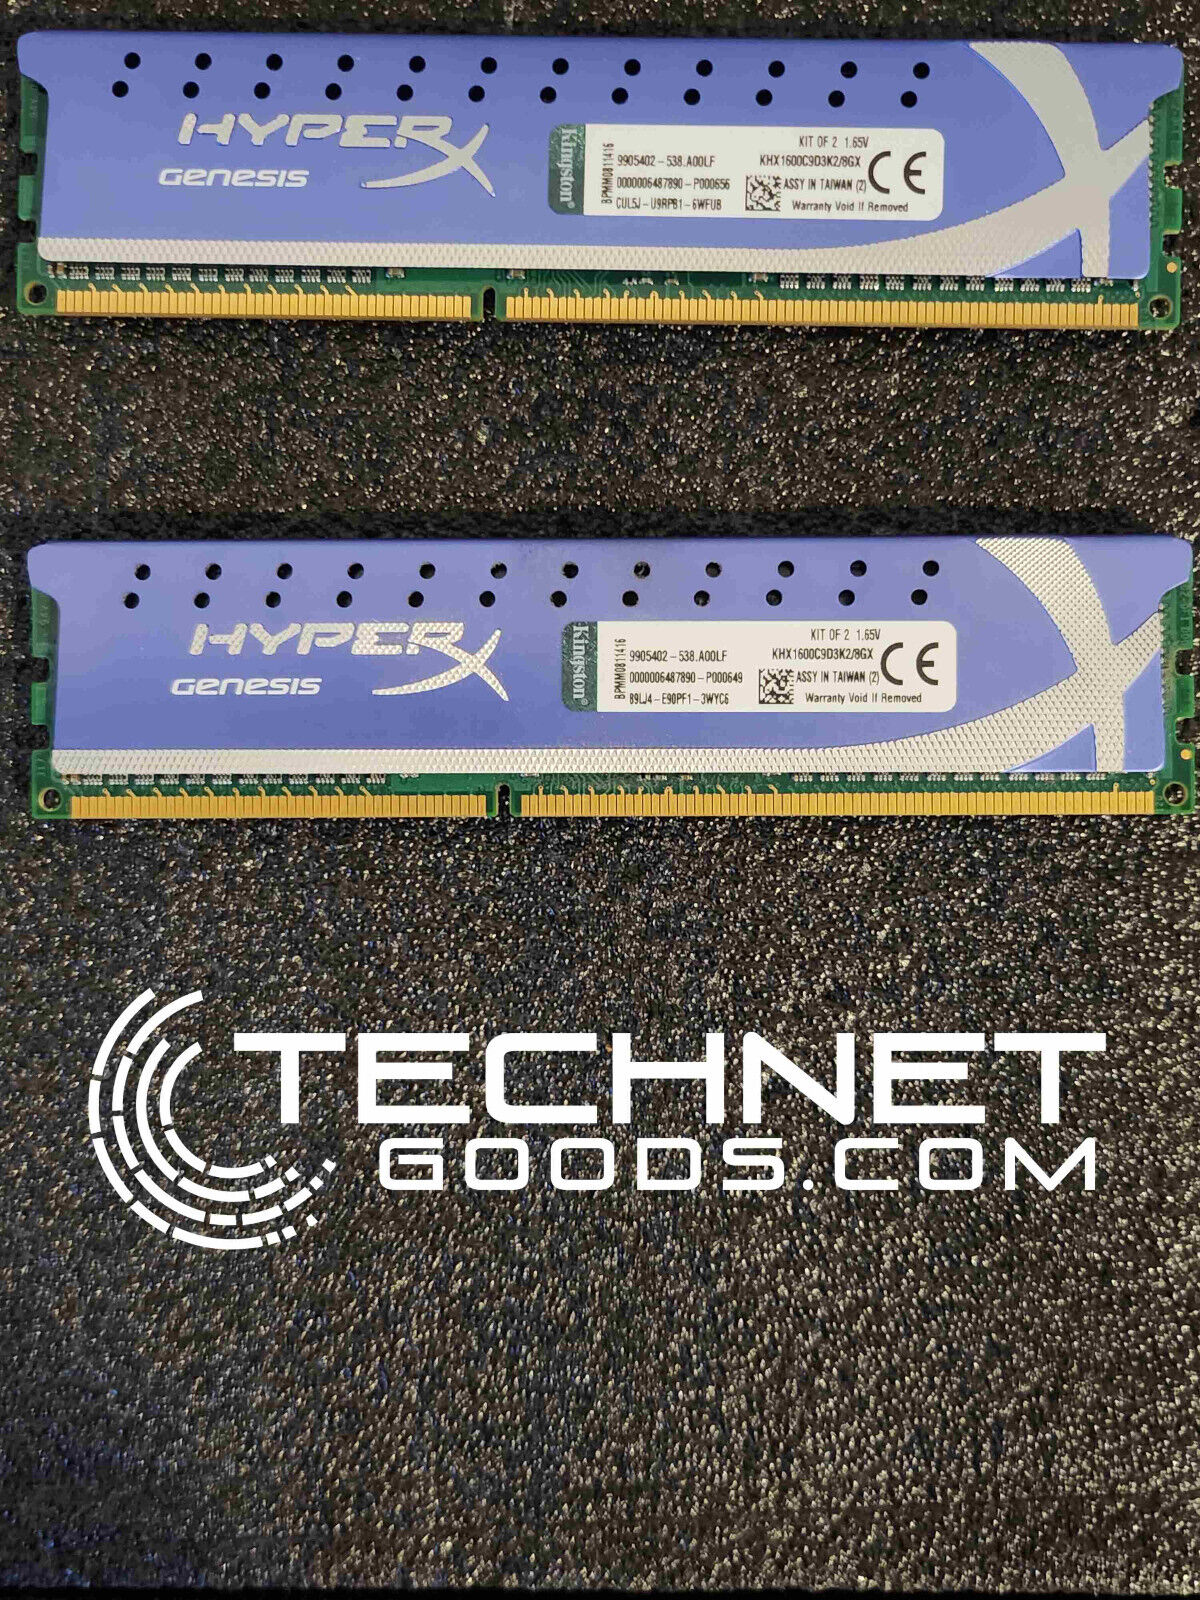 Kingston HyperX Genesis 2x4GB DDR3 1600MHz (KHX1600C9D3K2/8GX) - TESTED